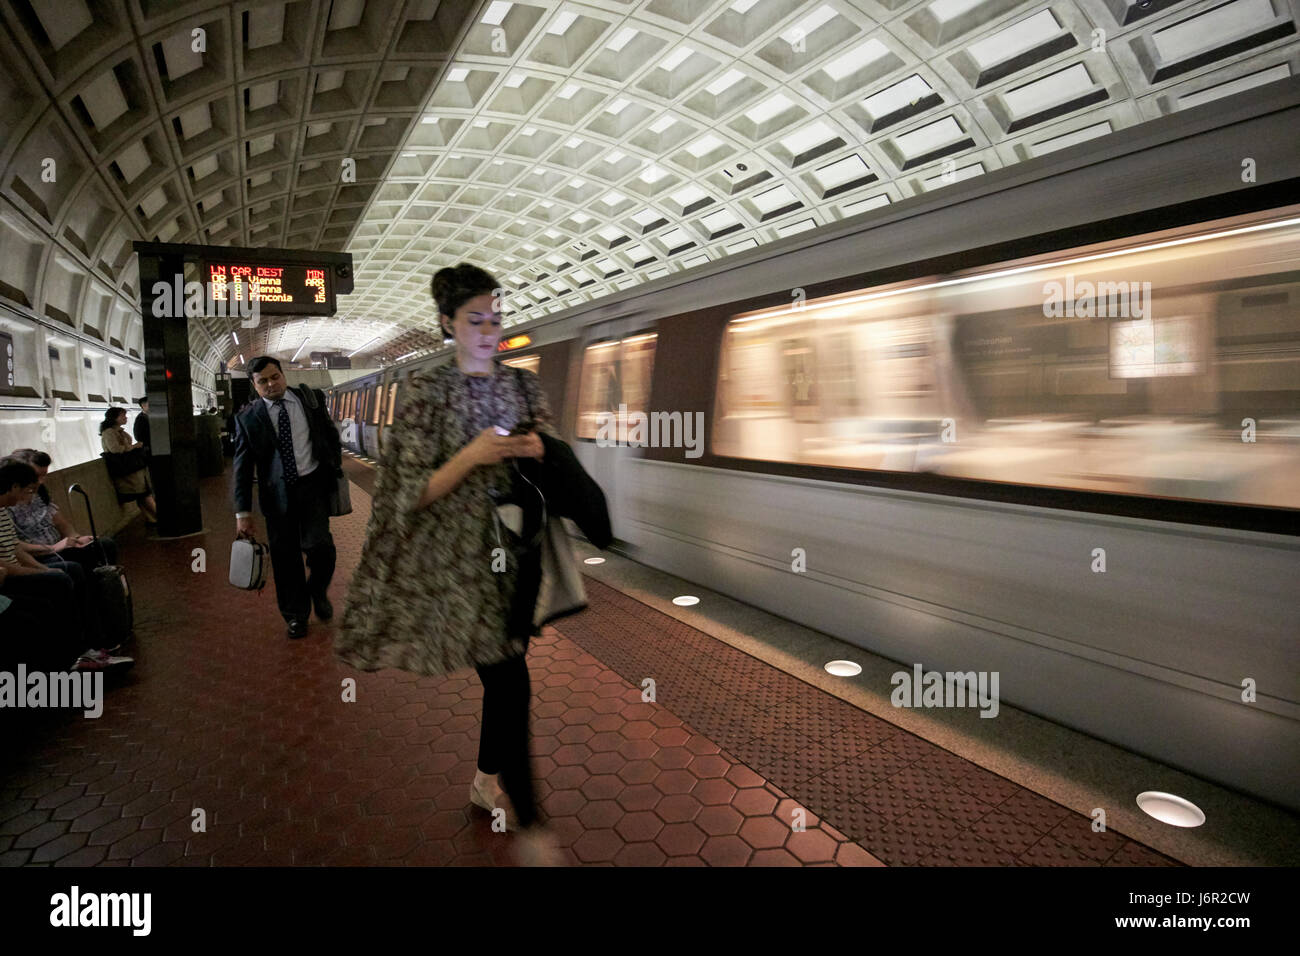 passengers and moving train at smithsonian metro underground train system Washington DC USA deliberate motion blur Stock Photo